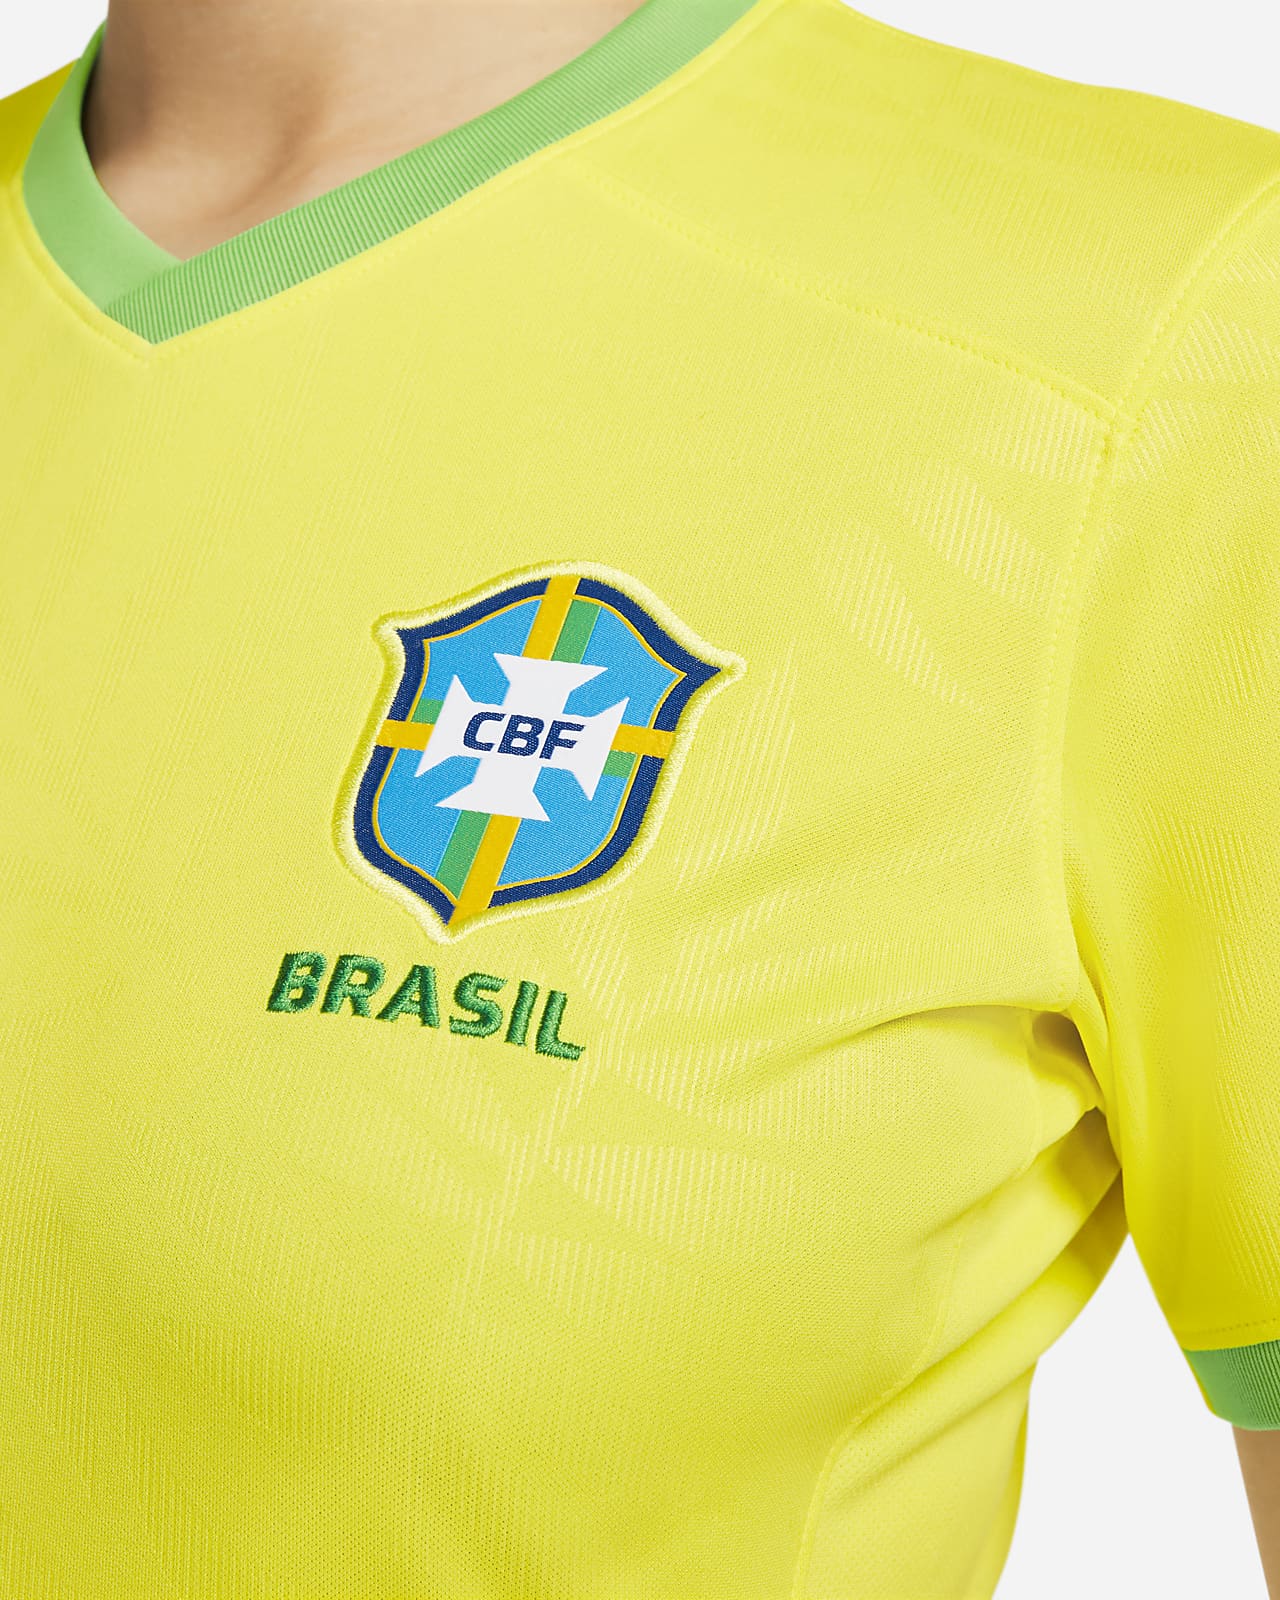 Nike, Tops, Womens Nike Team Brazil Soccer Jersey